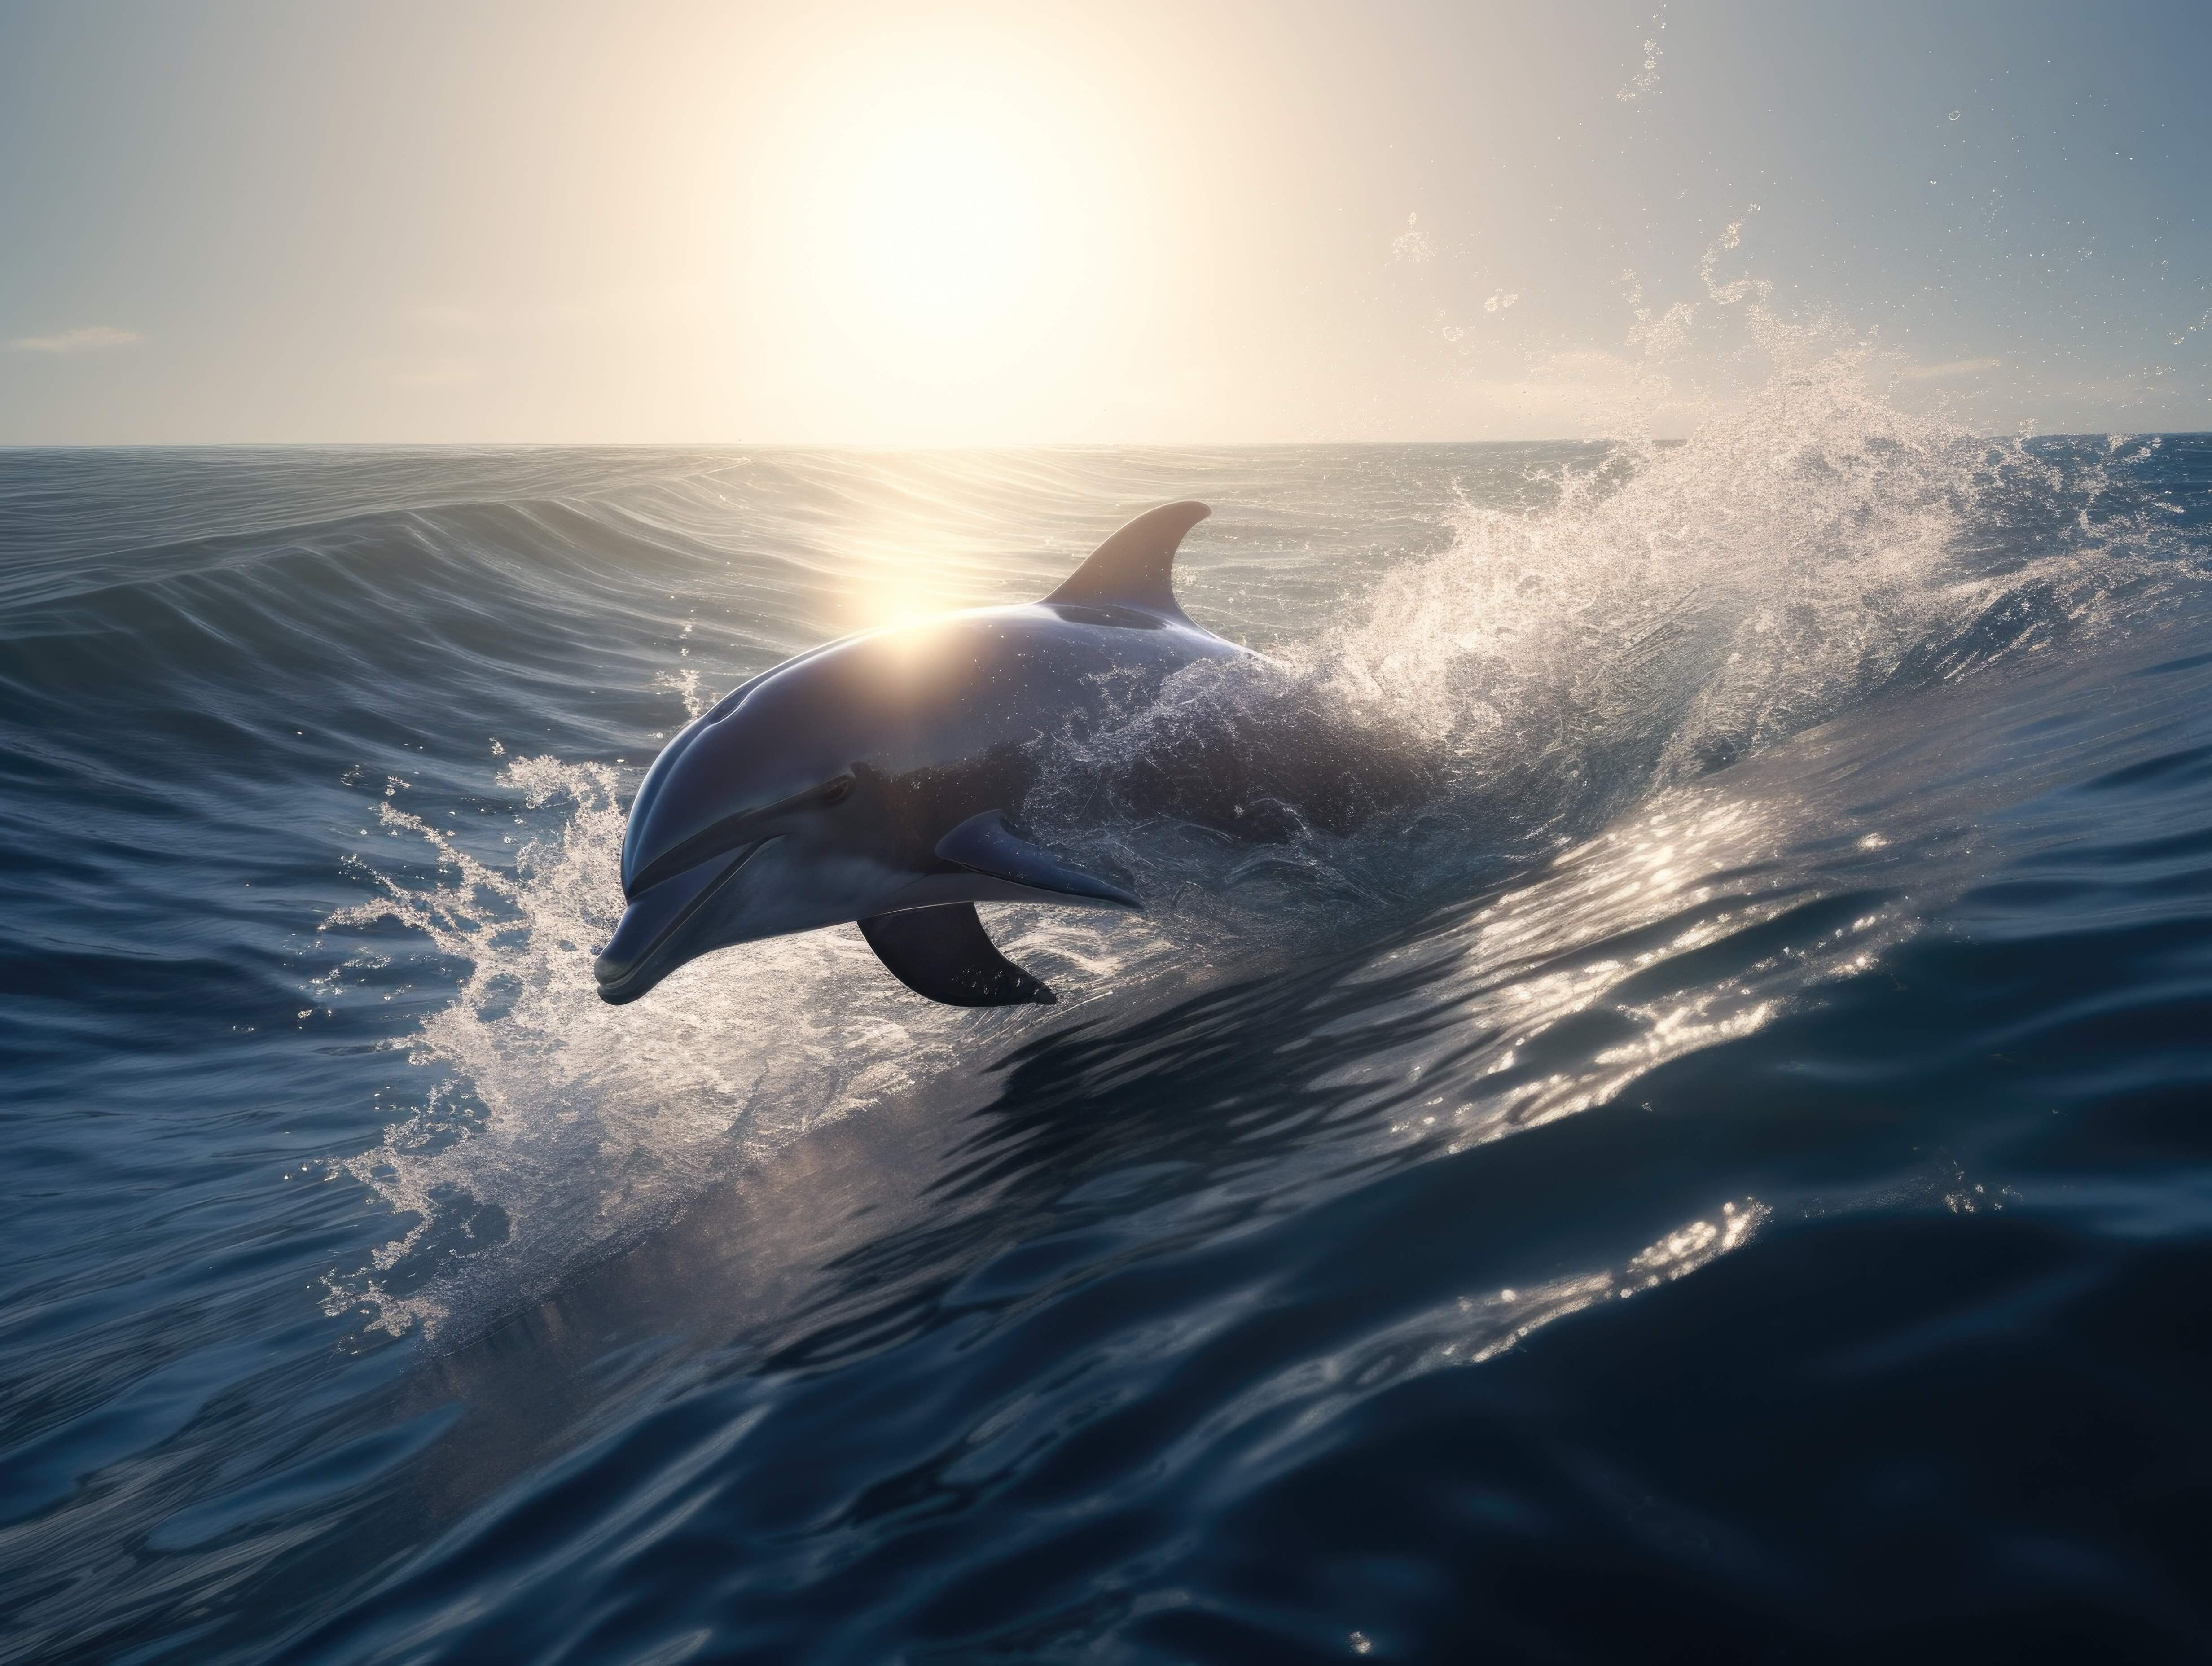 Dolphin Spirit Animal